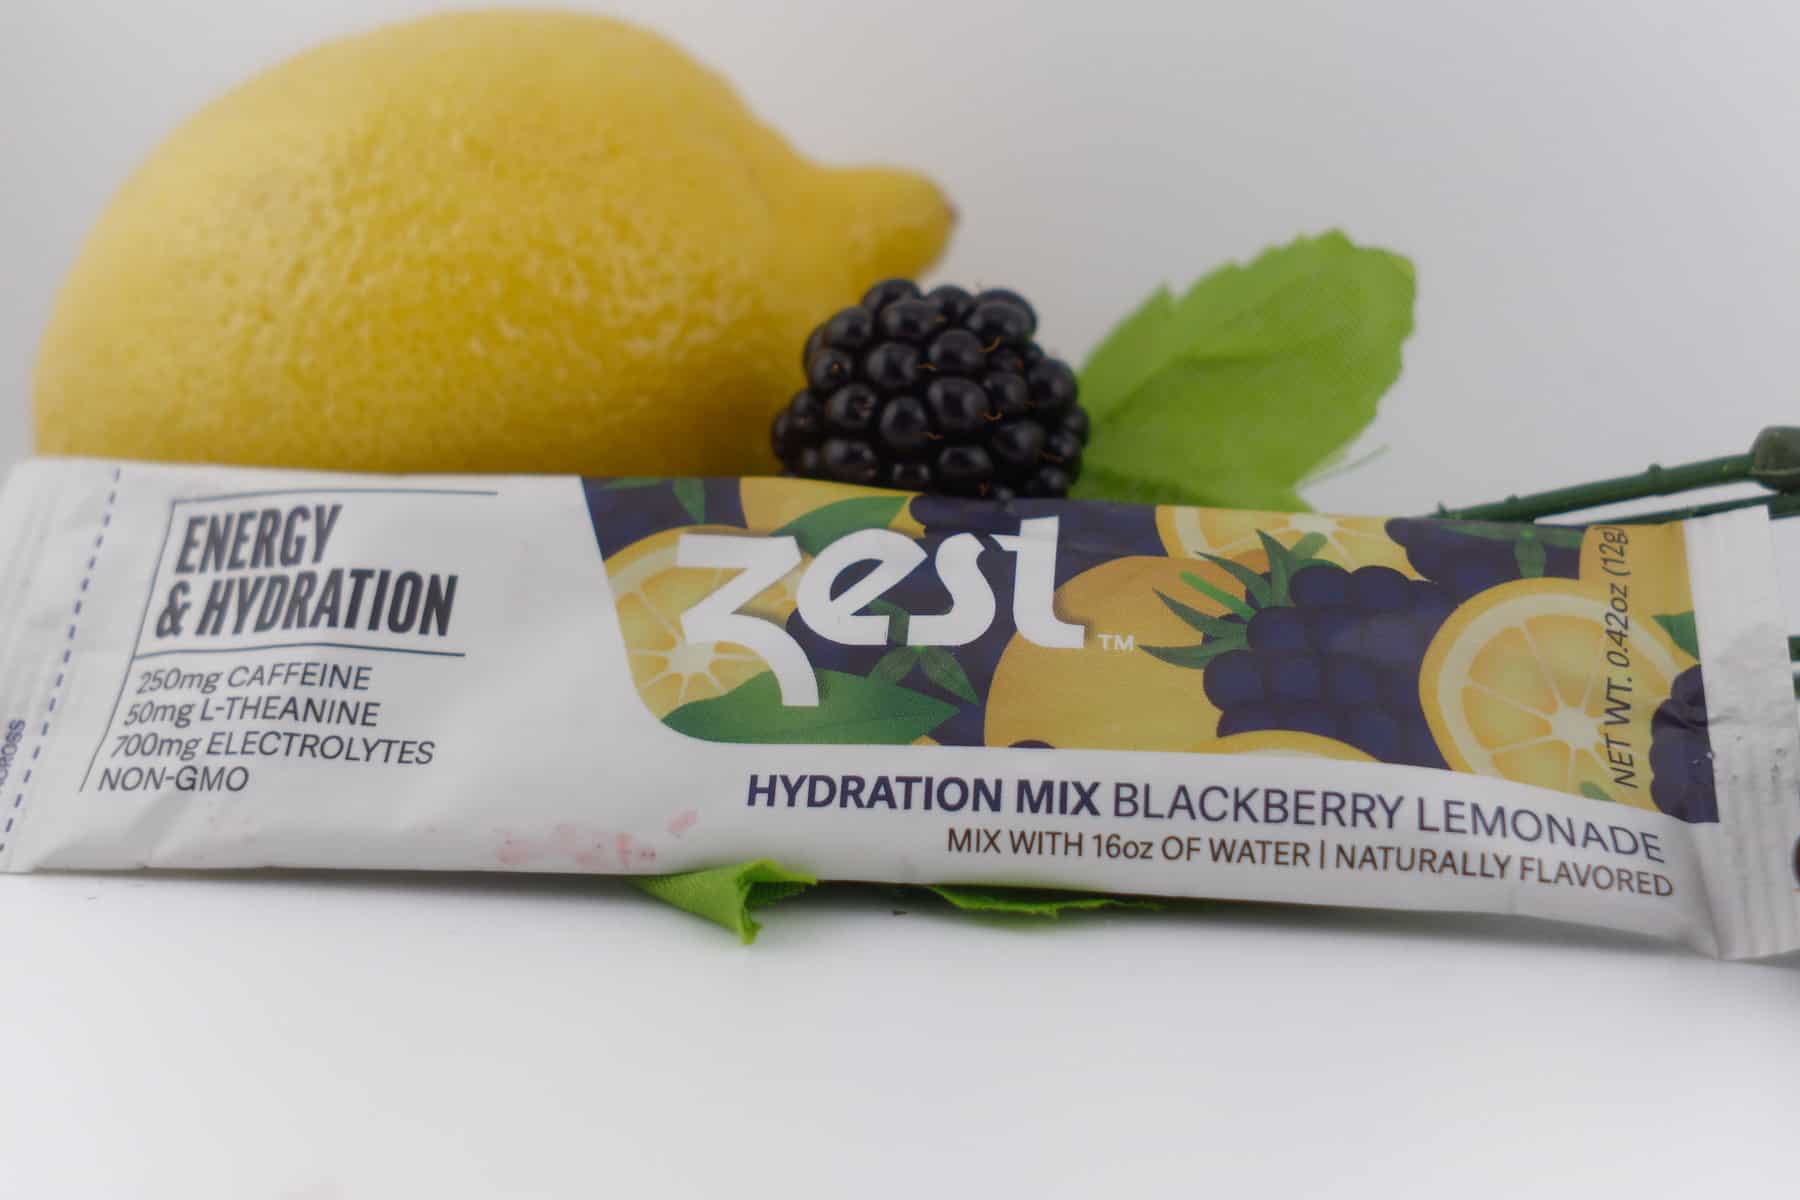 zest blackberry lemonade energy and hydration mix taylorhandyphoto the honey review